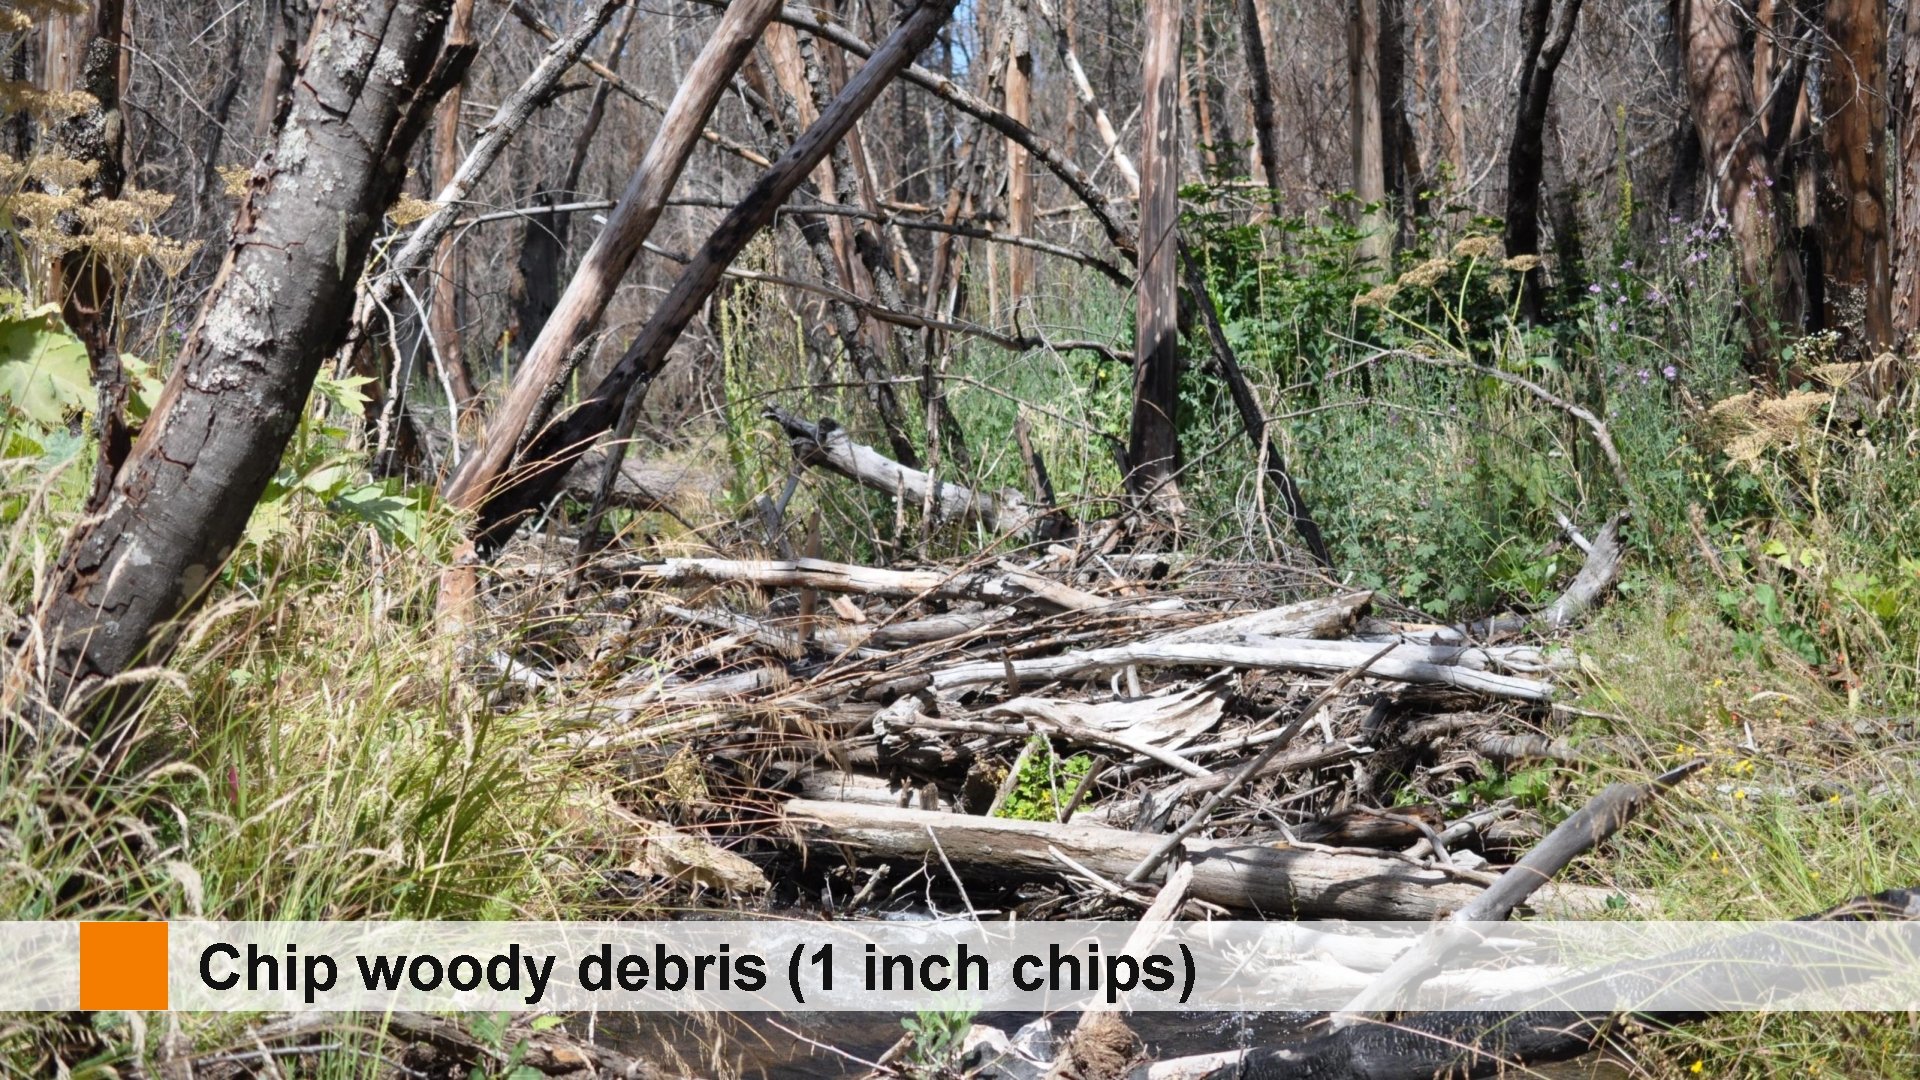 Chip woody debris (1 inch chips) 